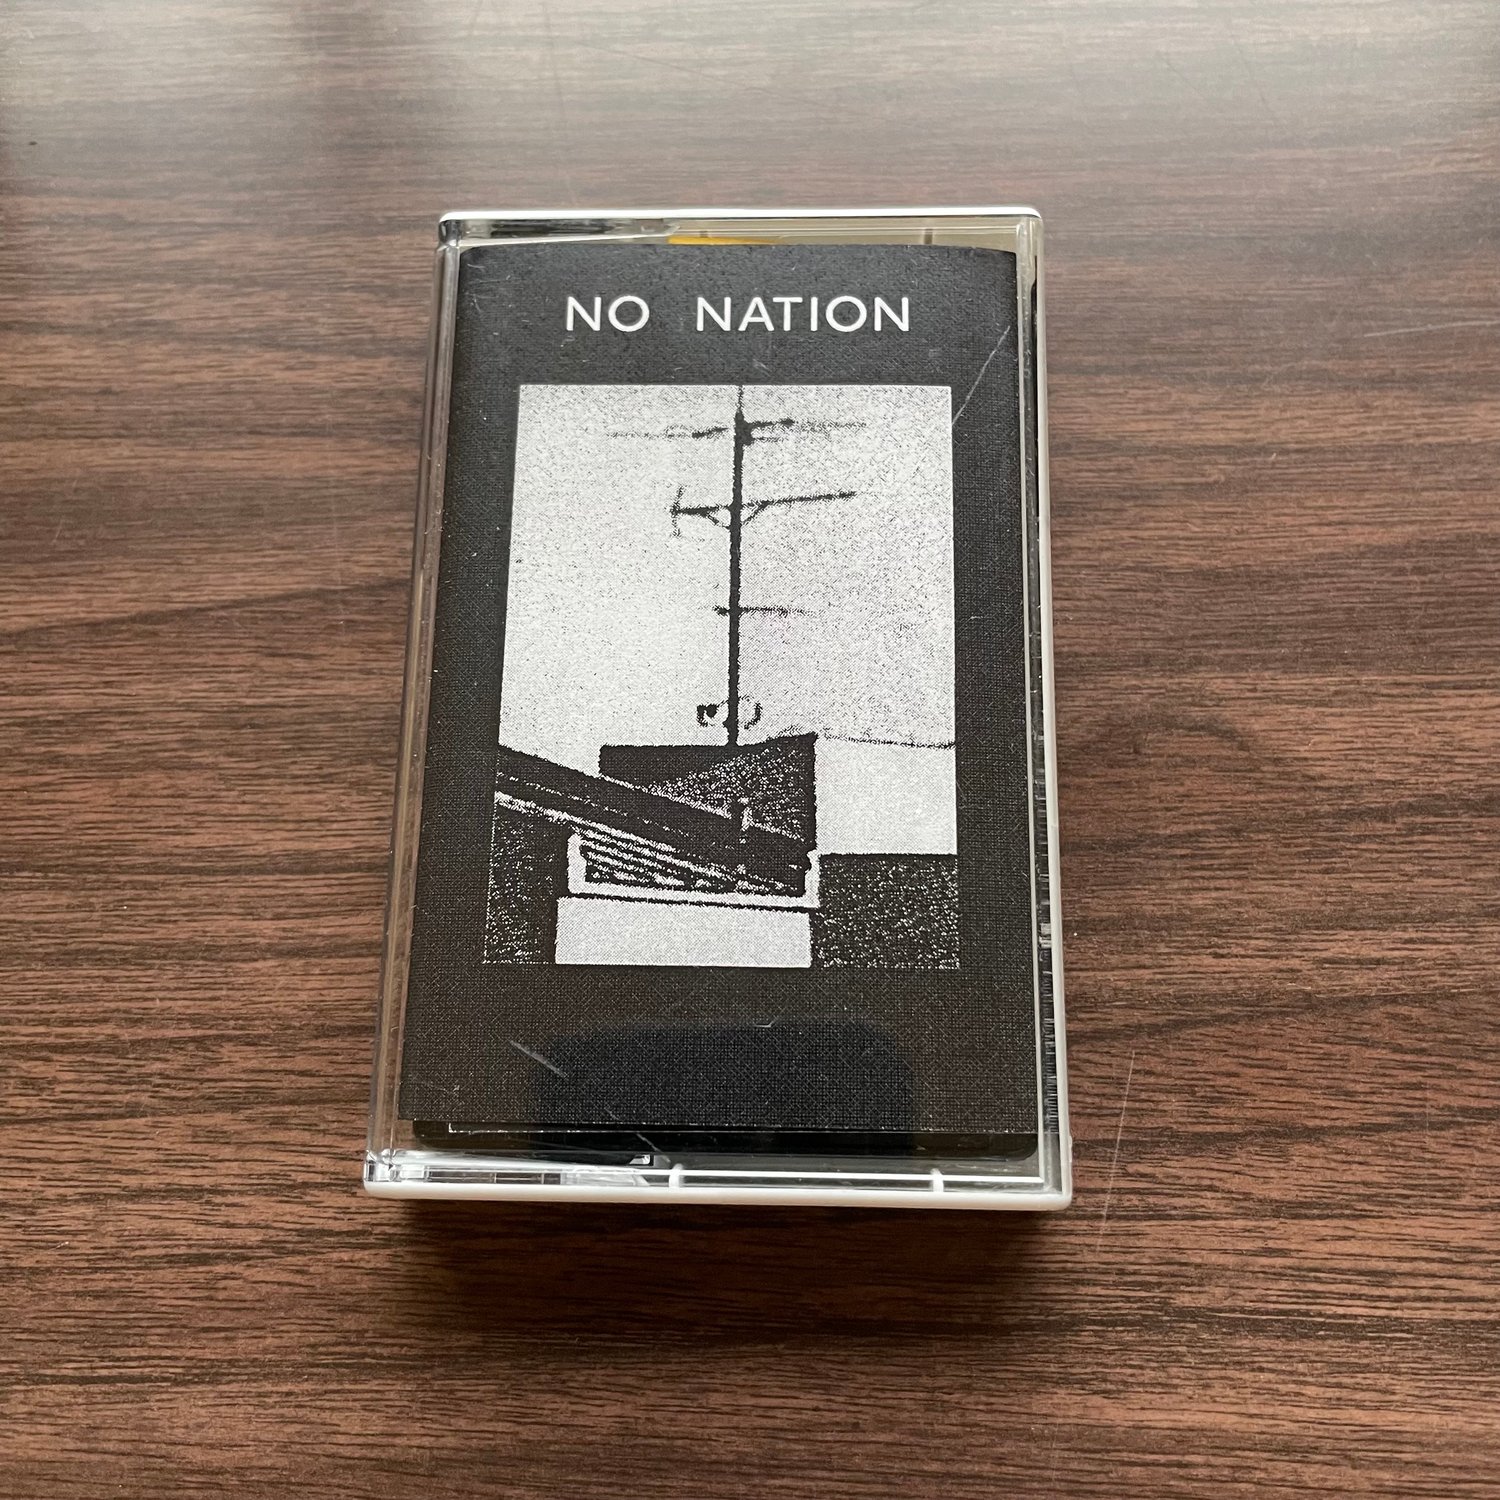 No Nation - Dodgy Days (cs)